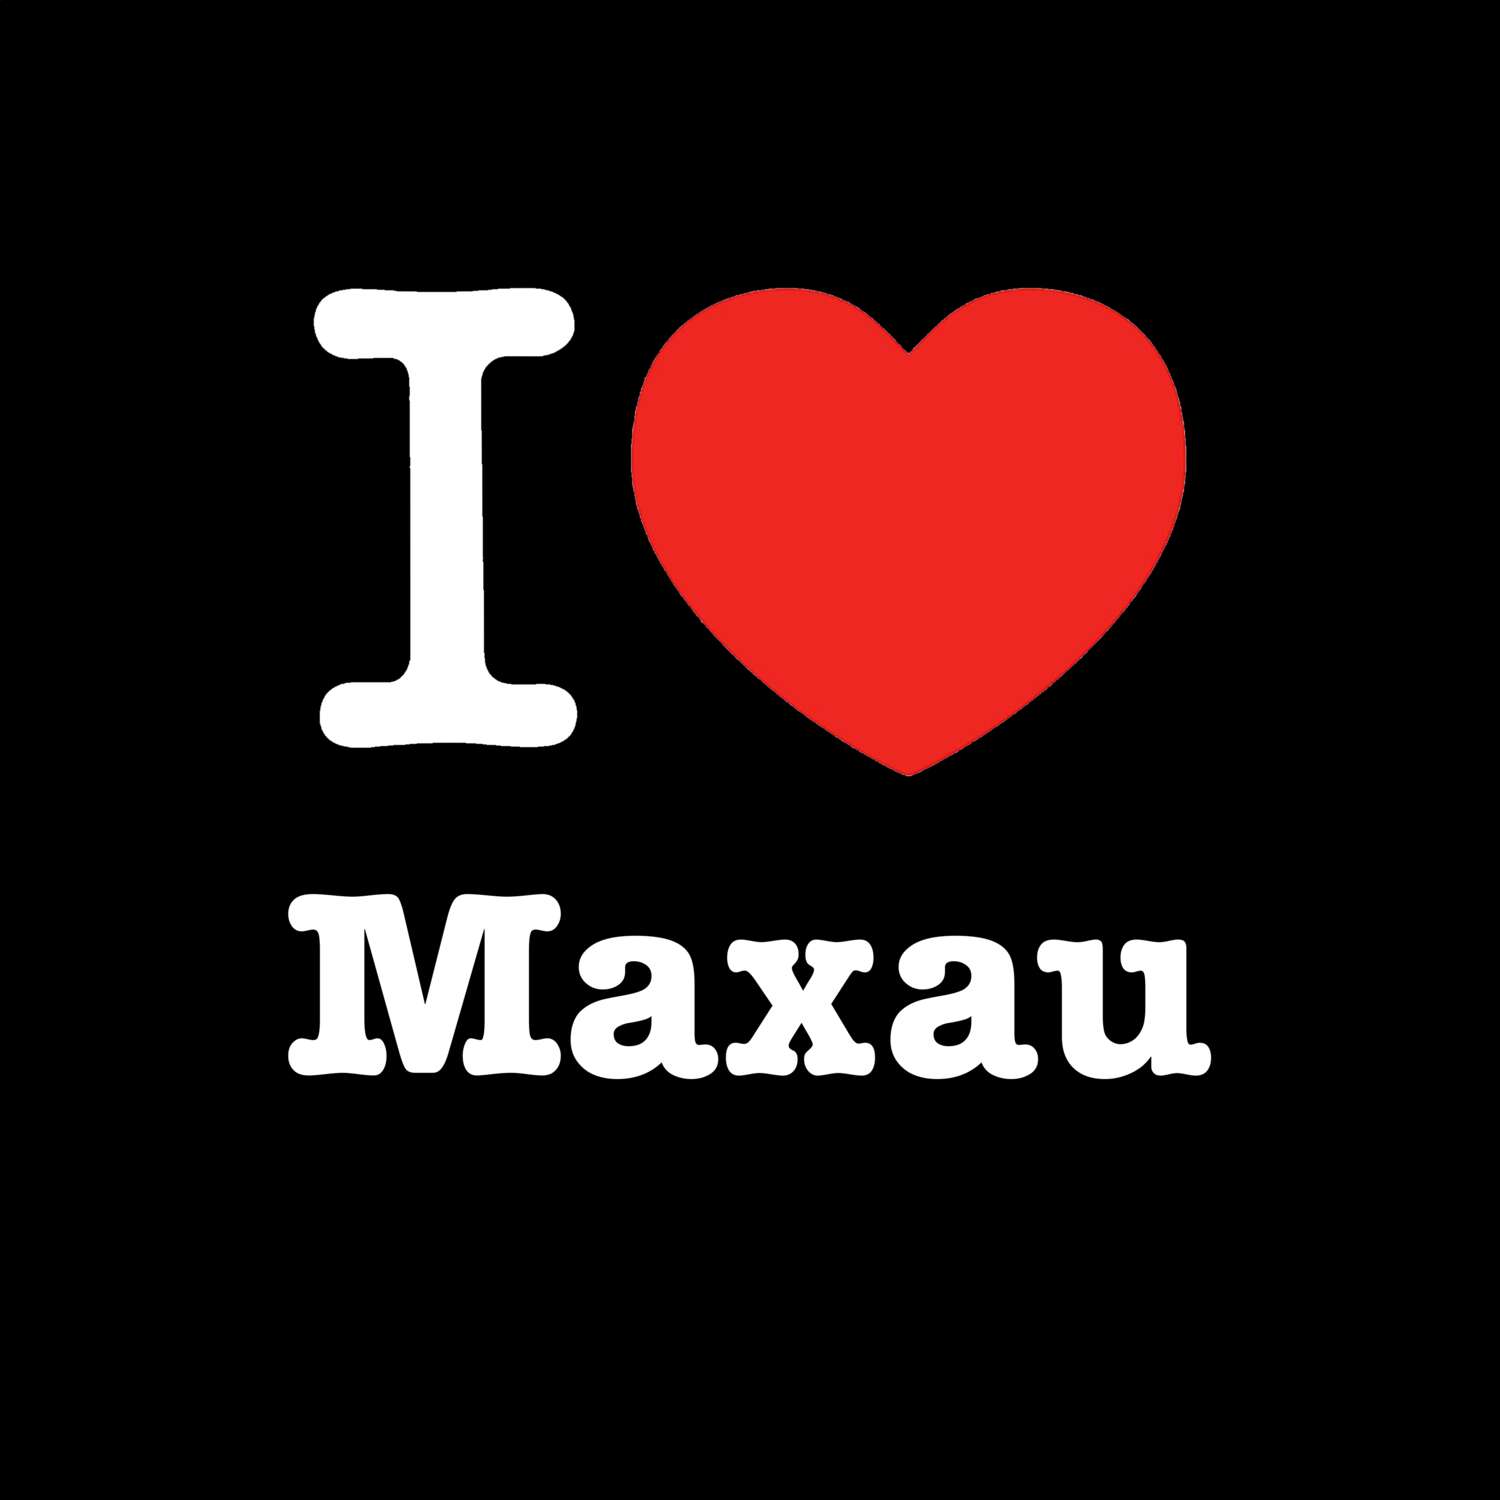 Maxau T-Shirt »I love«